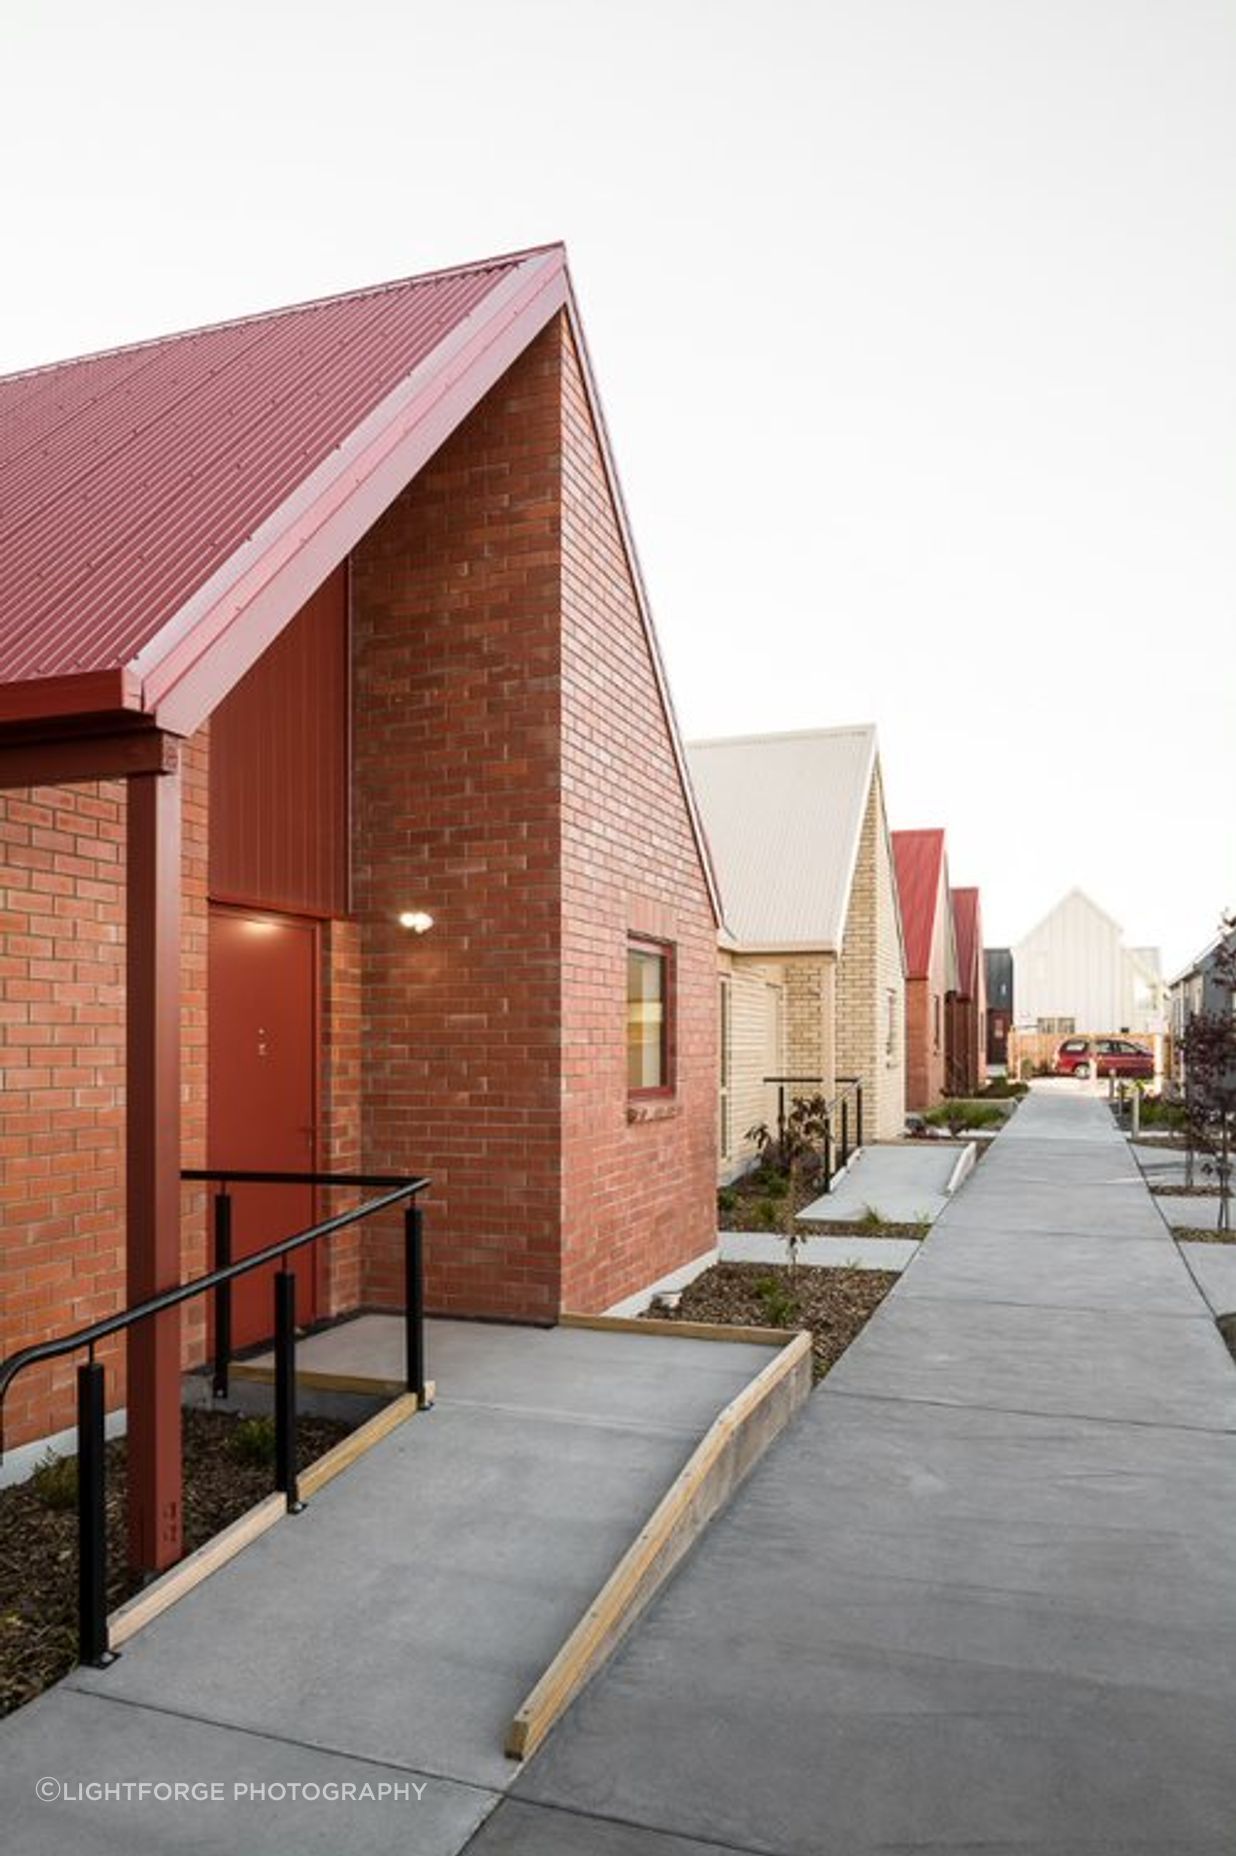 2020 Dulux Colour Awards New Zealand Grand Prix Winner: Social Housing Development Rangiora by Rohan Collett Architects, New Zealand